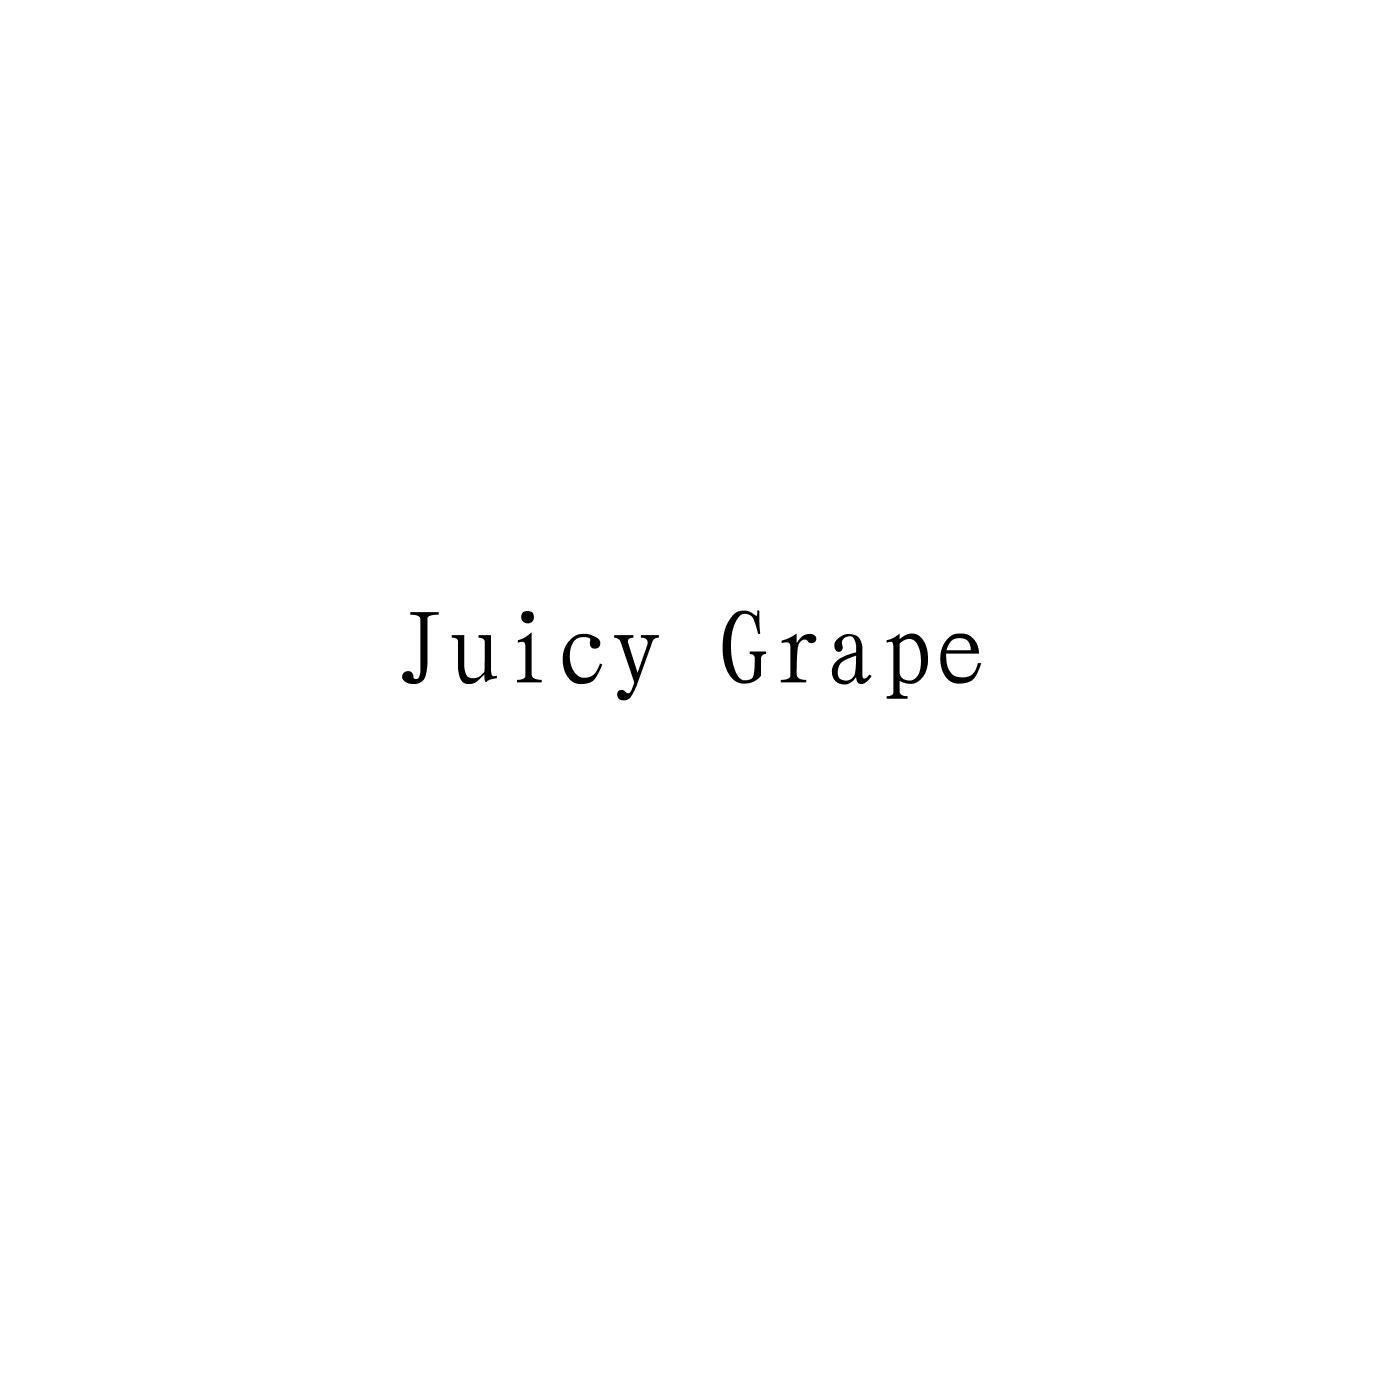 JUICY GRAPE